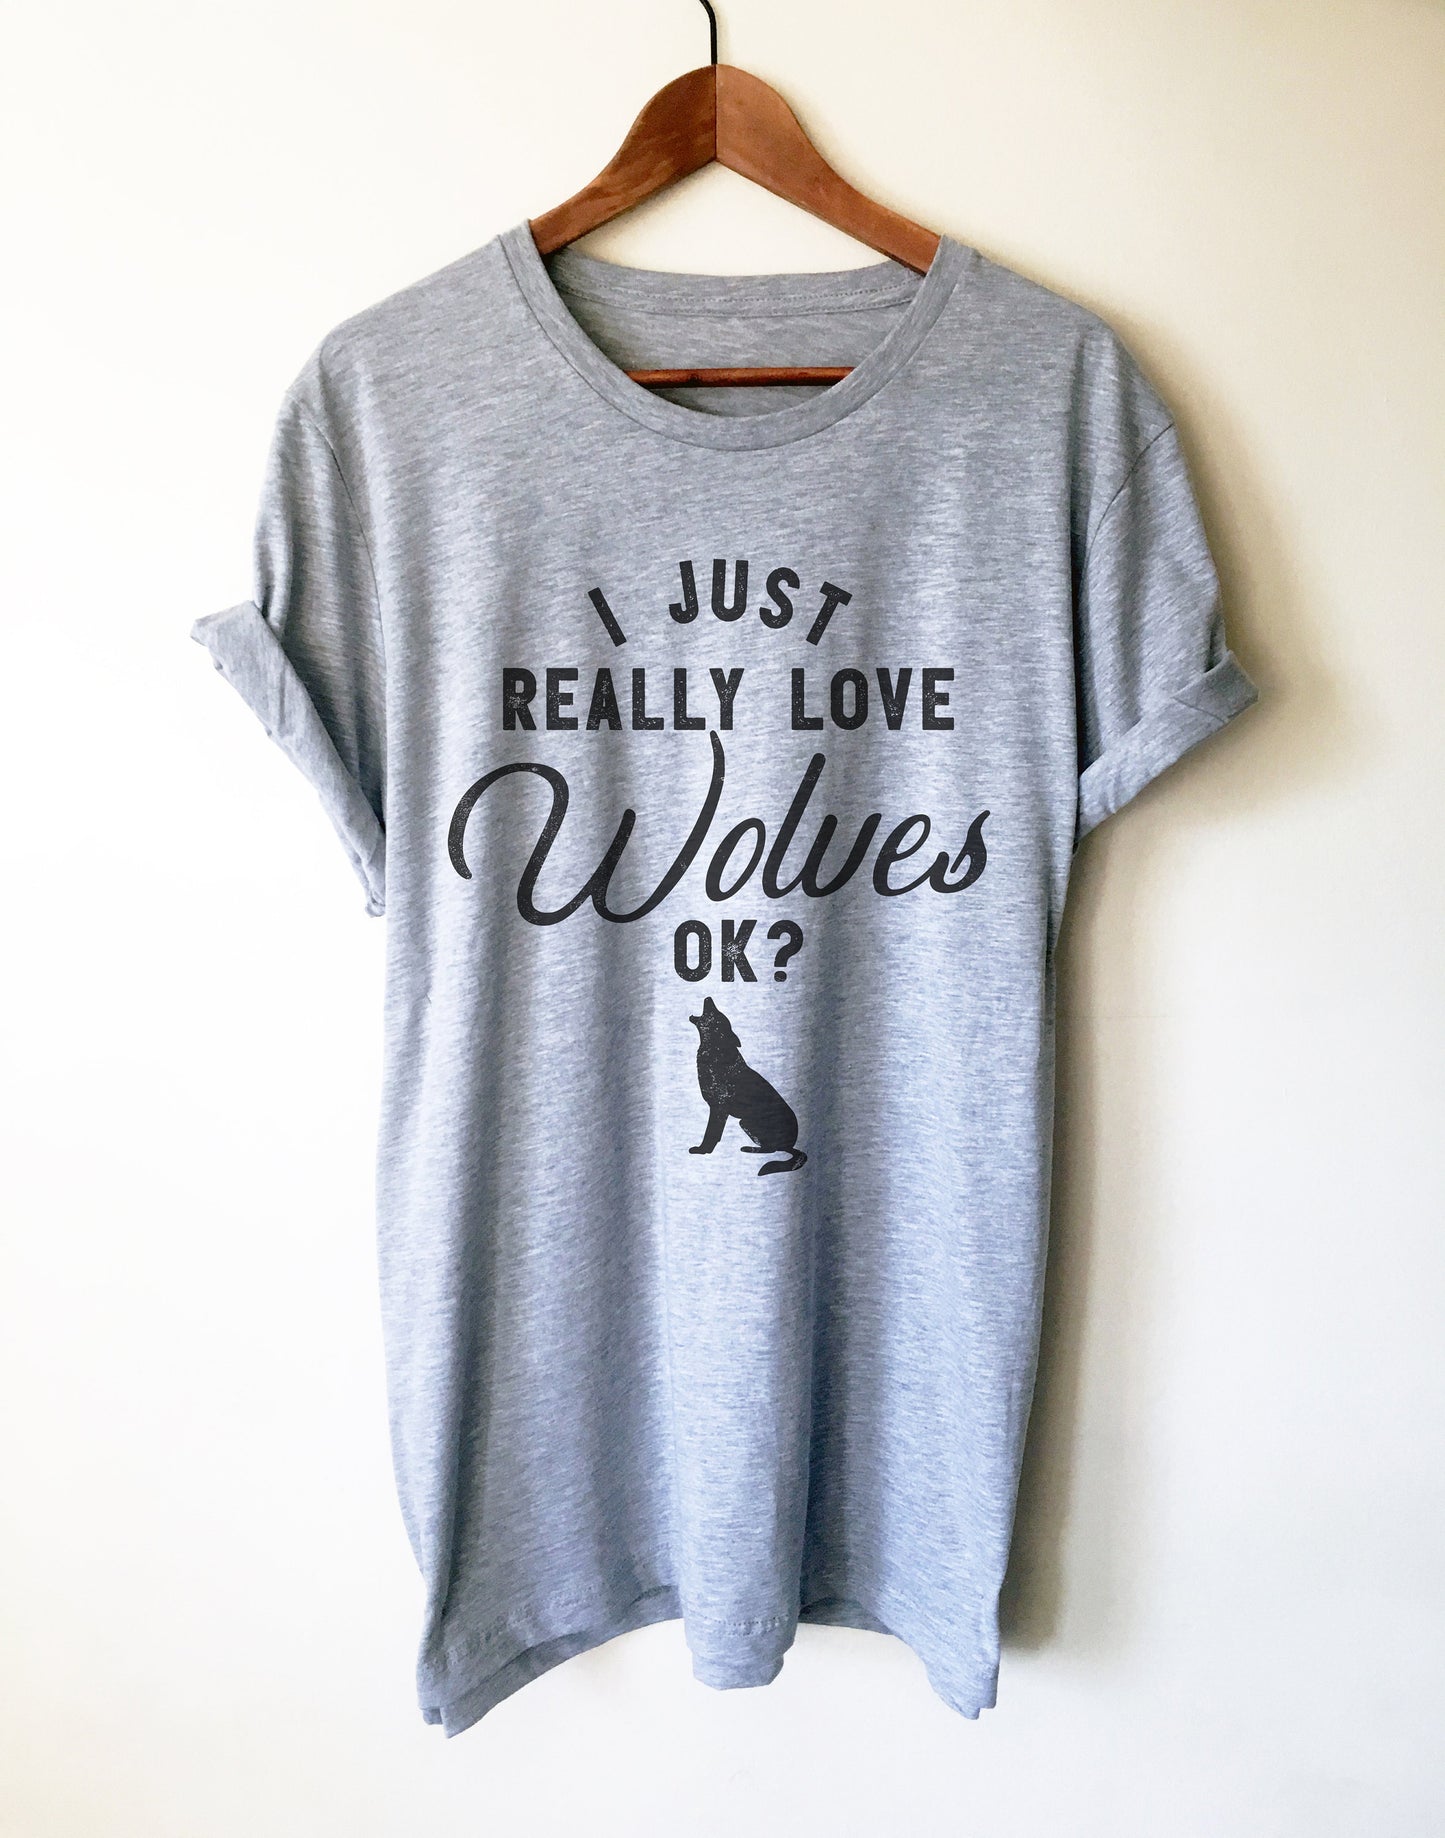 I Just Really Love Wolves OK?